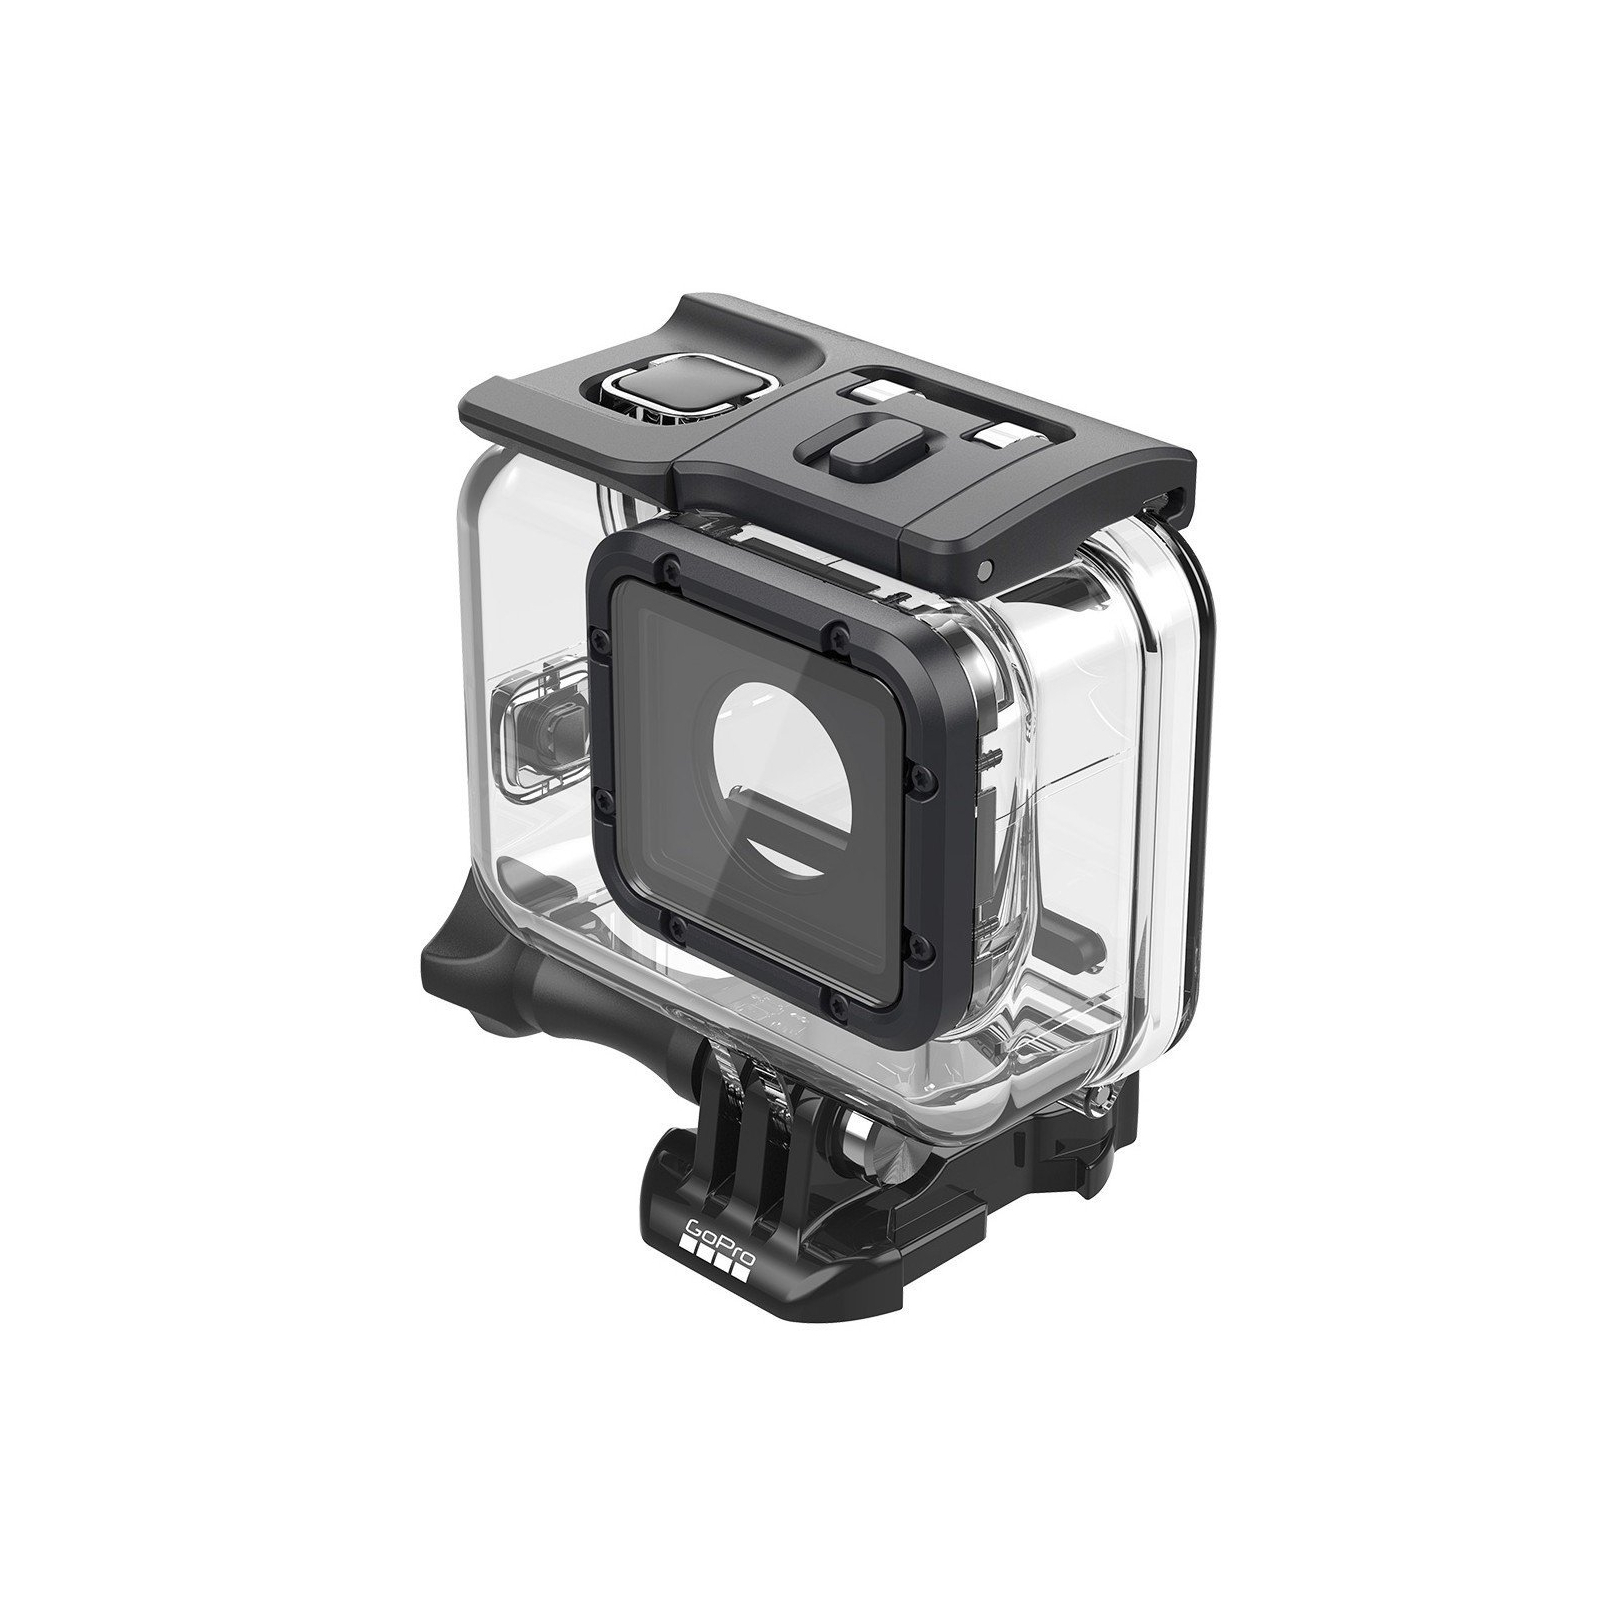 Аксессуар к экшн-камерам GoPro Box Armageddon (Protective Housing HERO5/6/7 Black) (AADIV-001)